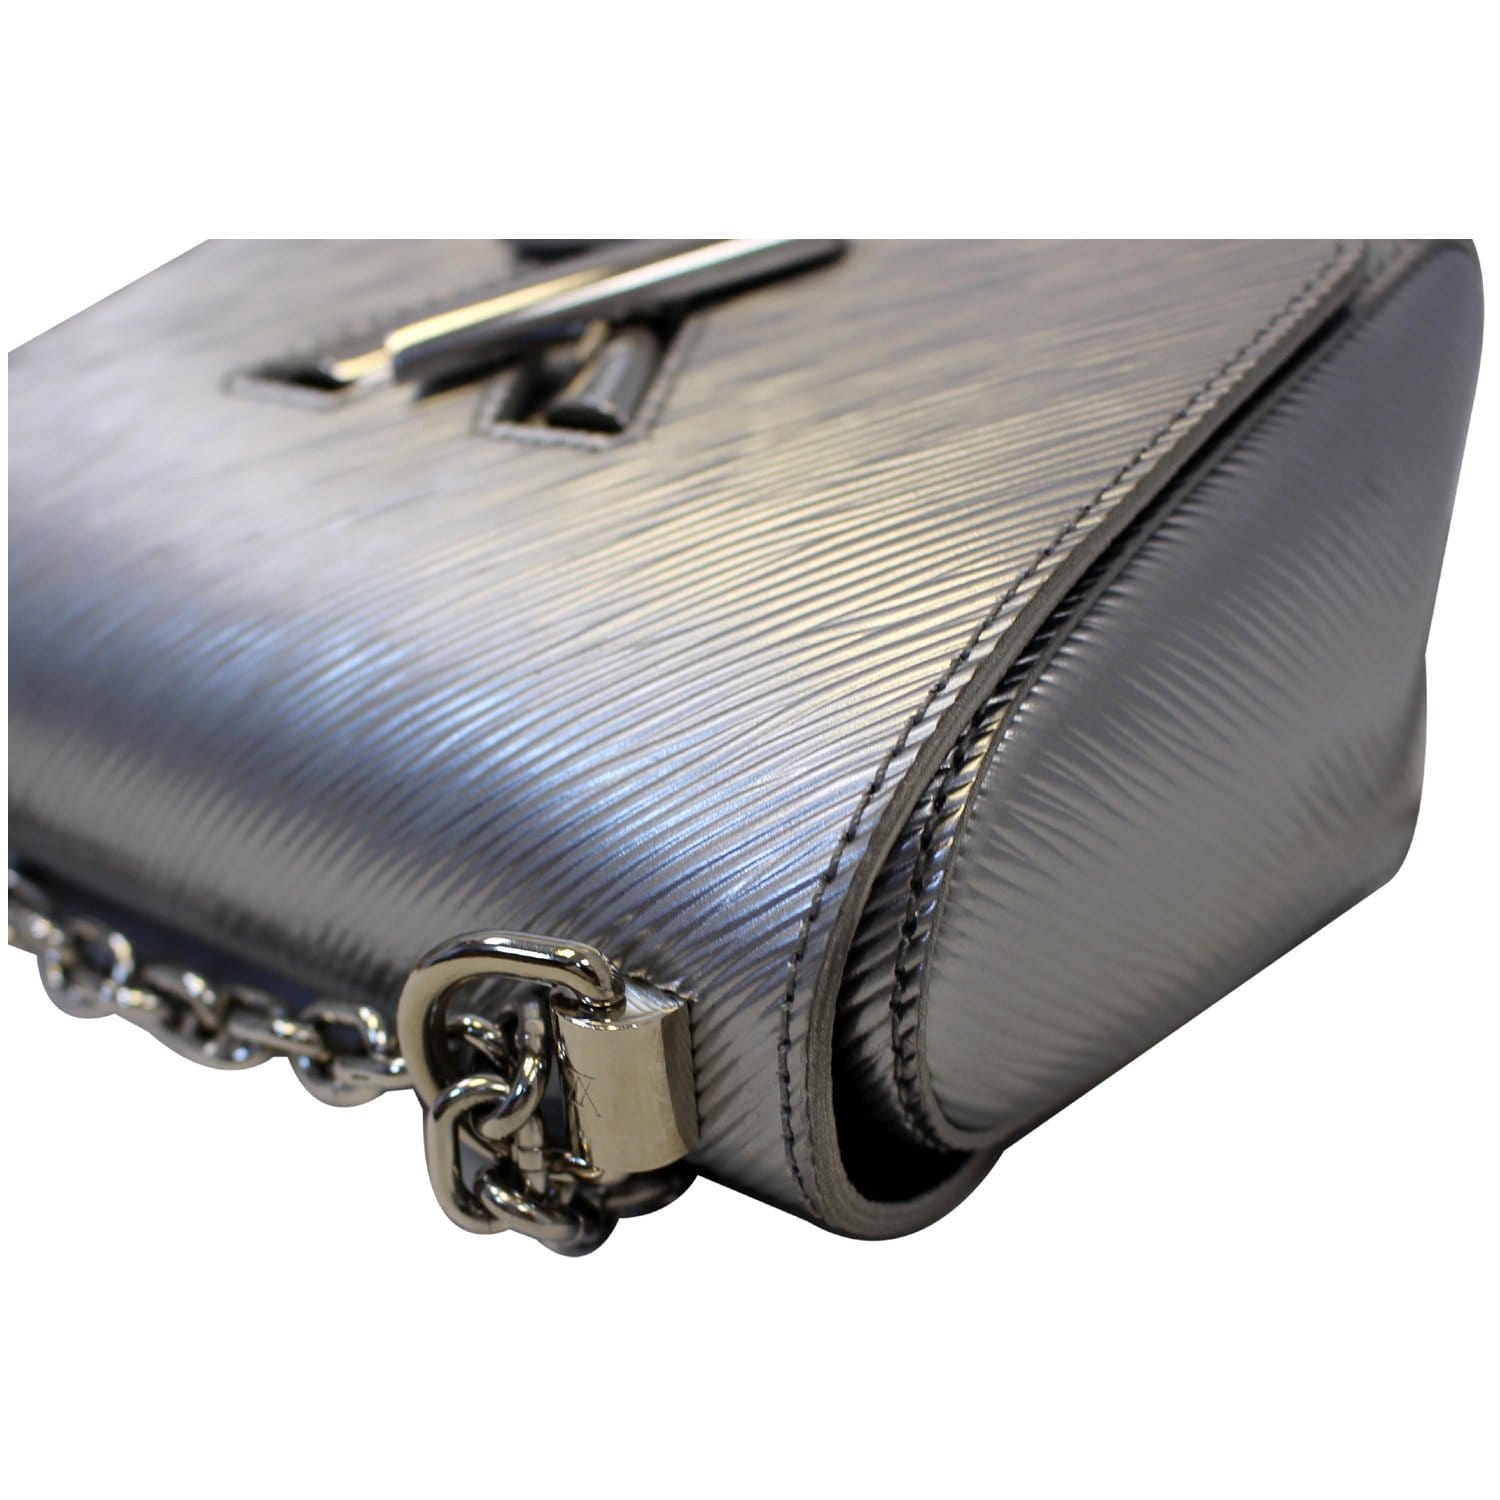 Louis Vuitton Silver Lizard Twist PM Handbag Limited Edition with